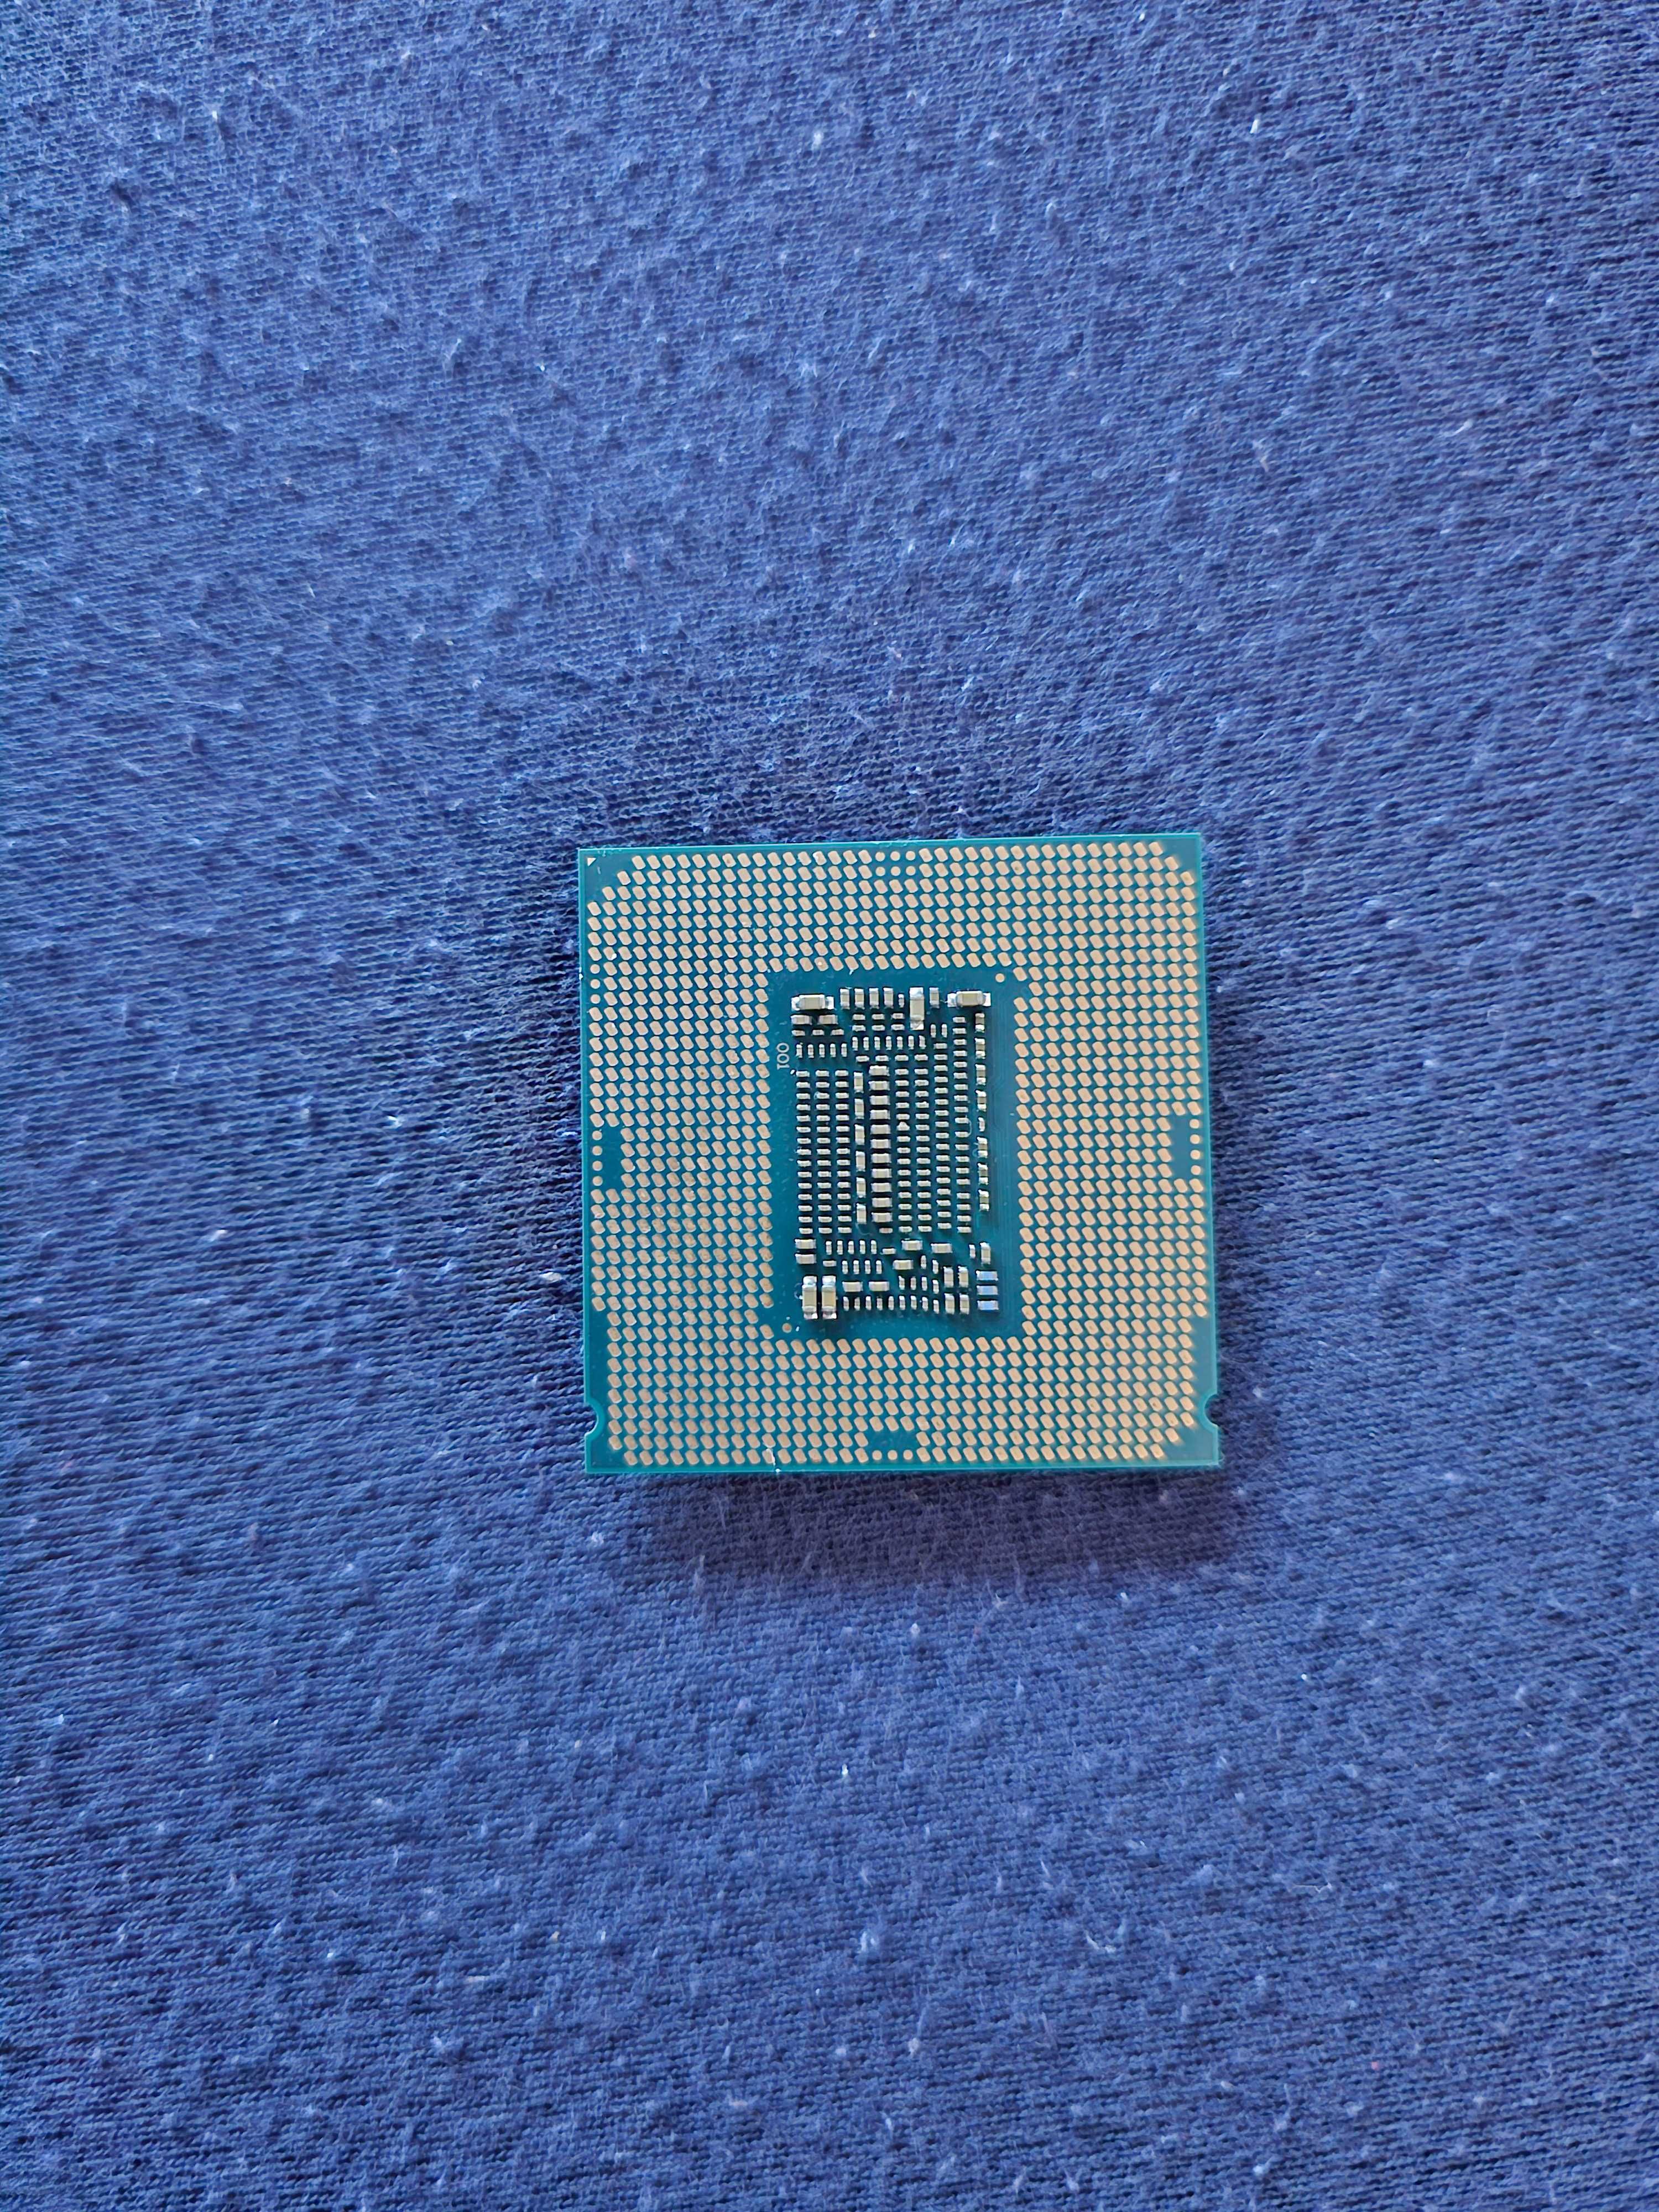 Procesor Intel Coffee Lake, Core i7 8700 3.2GHz